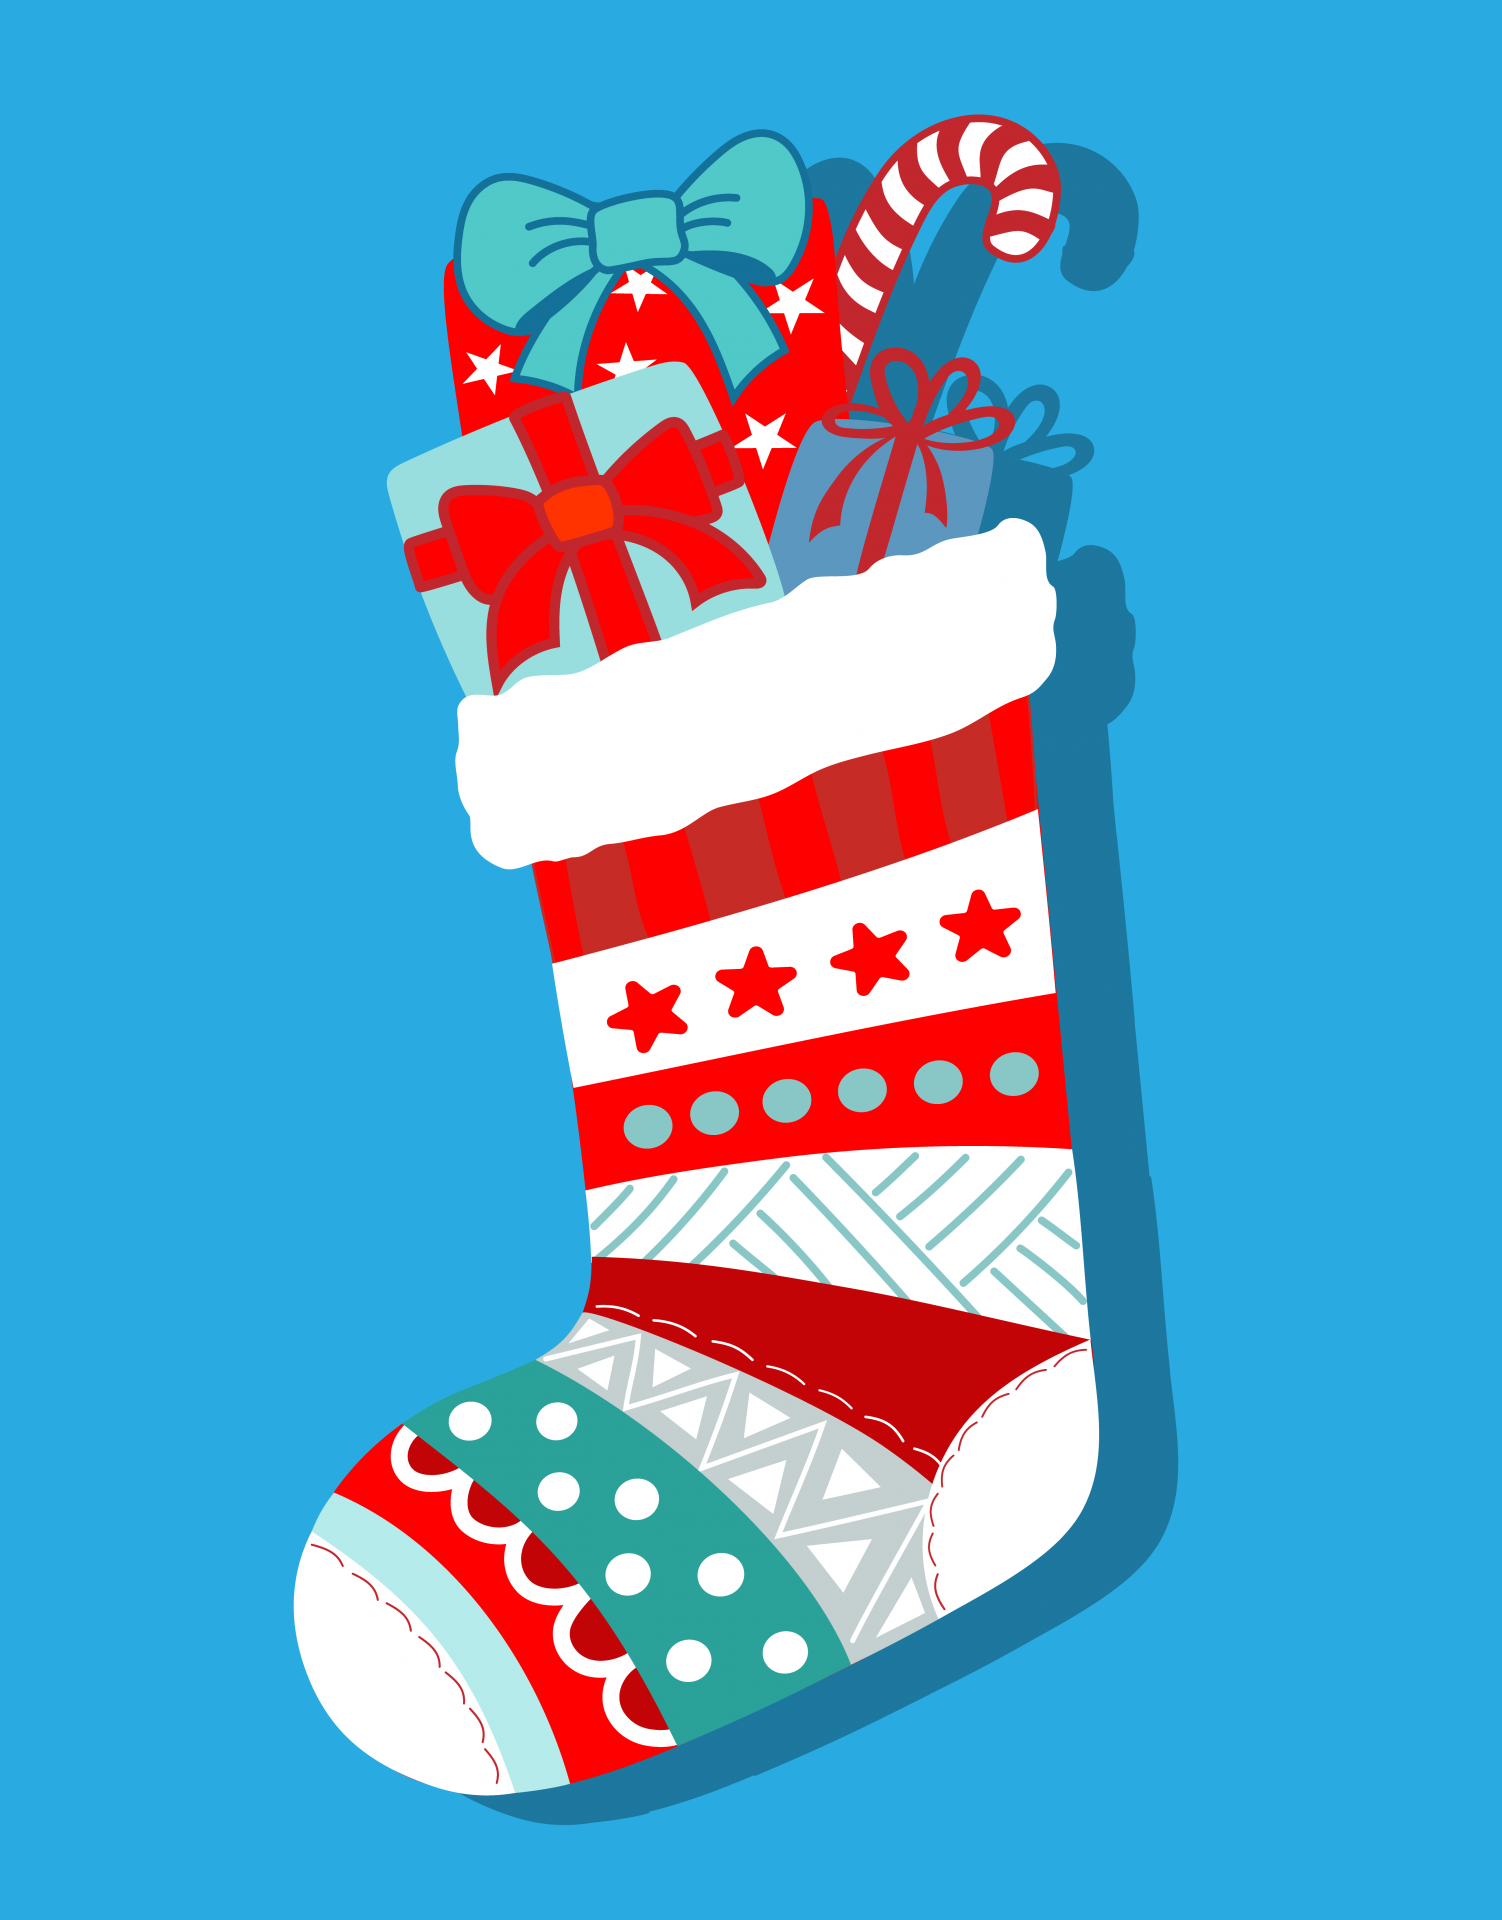 Christmas stocking full of gifts on blue background illustration